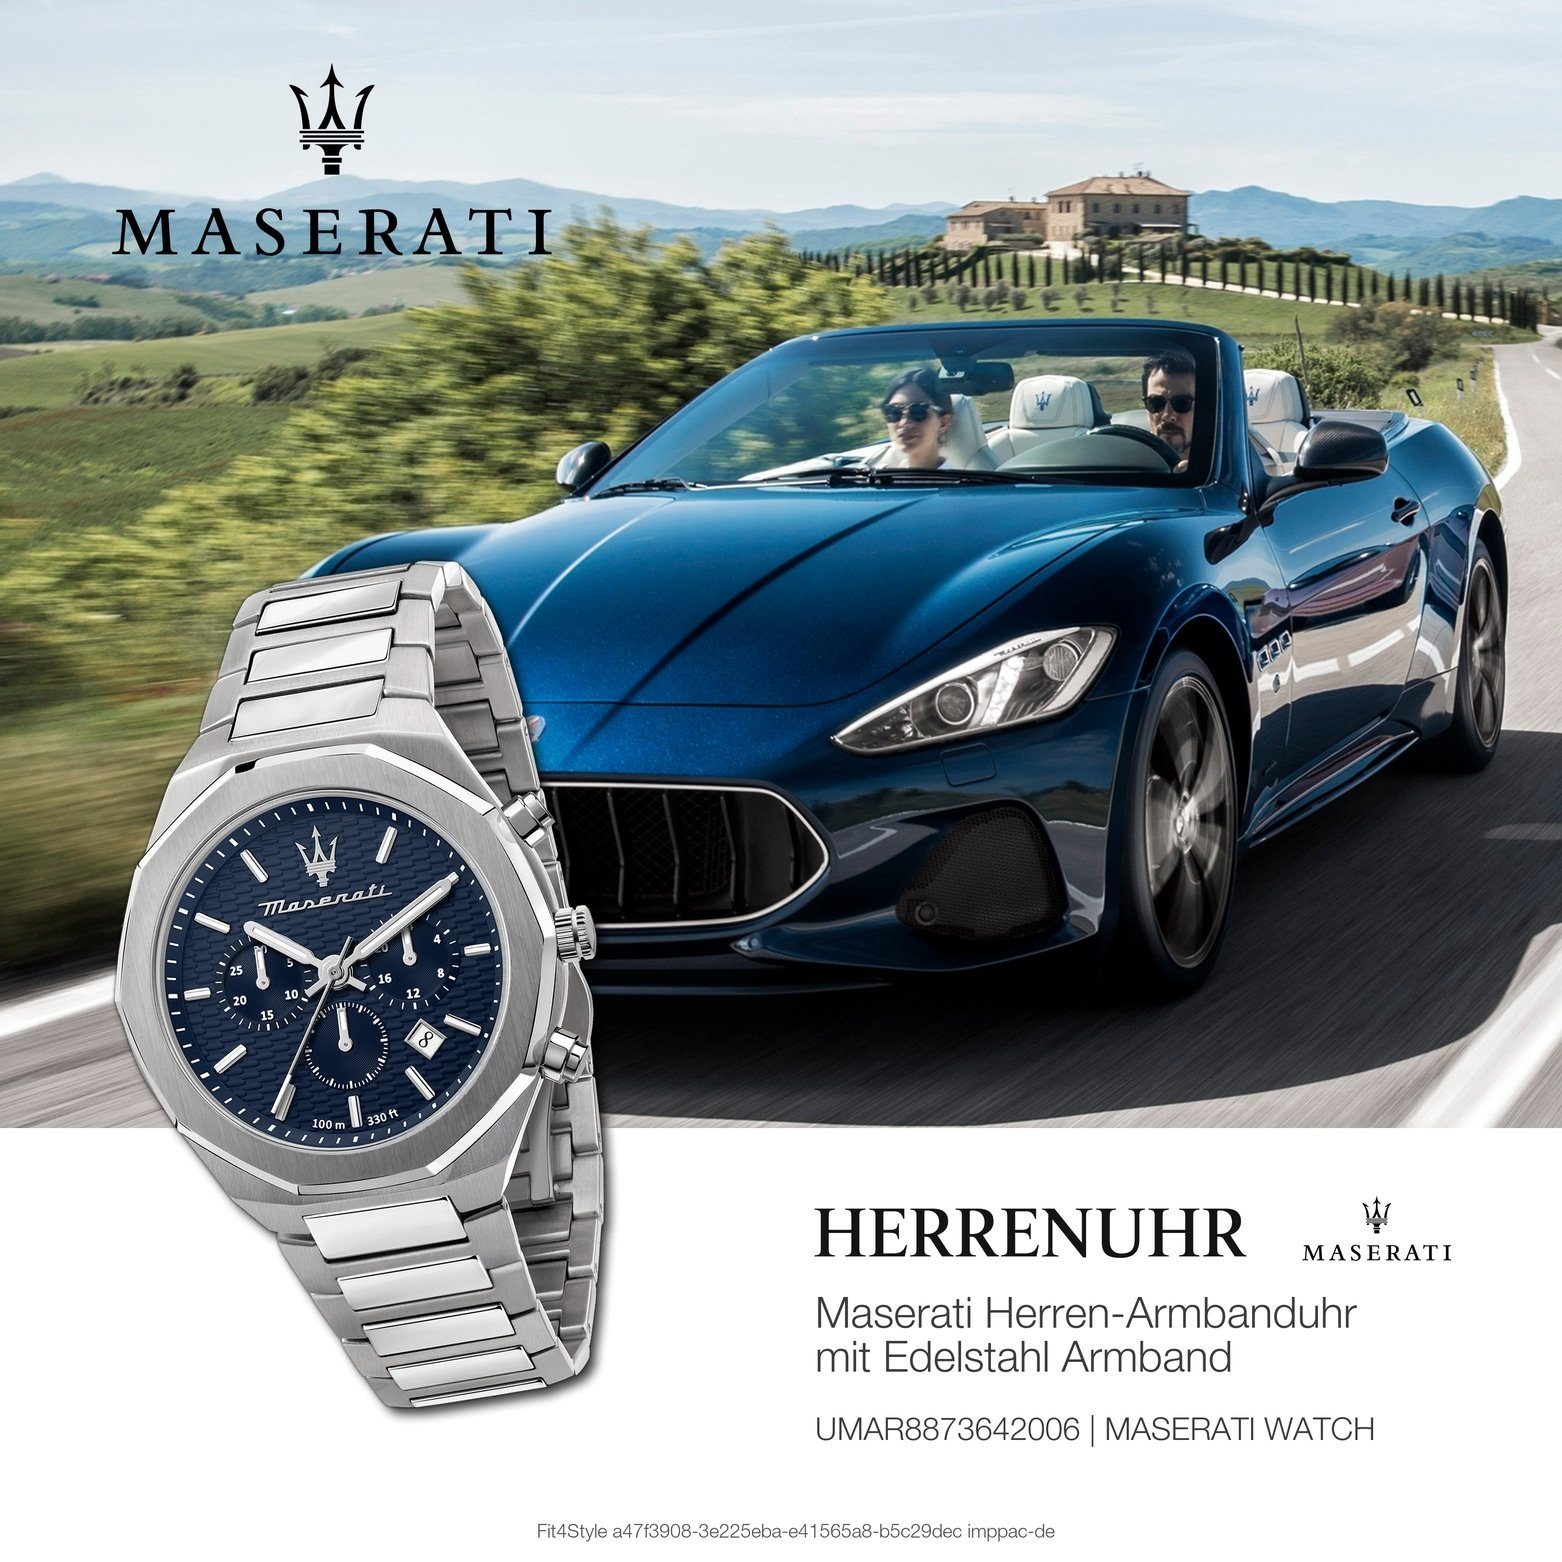 45mm) groß Made-In Edelstahlarmband, MASERATI Maserati Italy Chronograph rund, blau, STILE, Herrenuhr silber (ca. Herren Chronograph